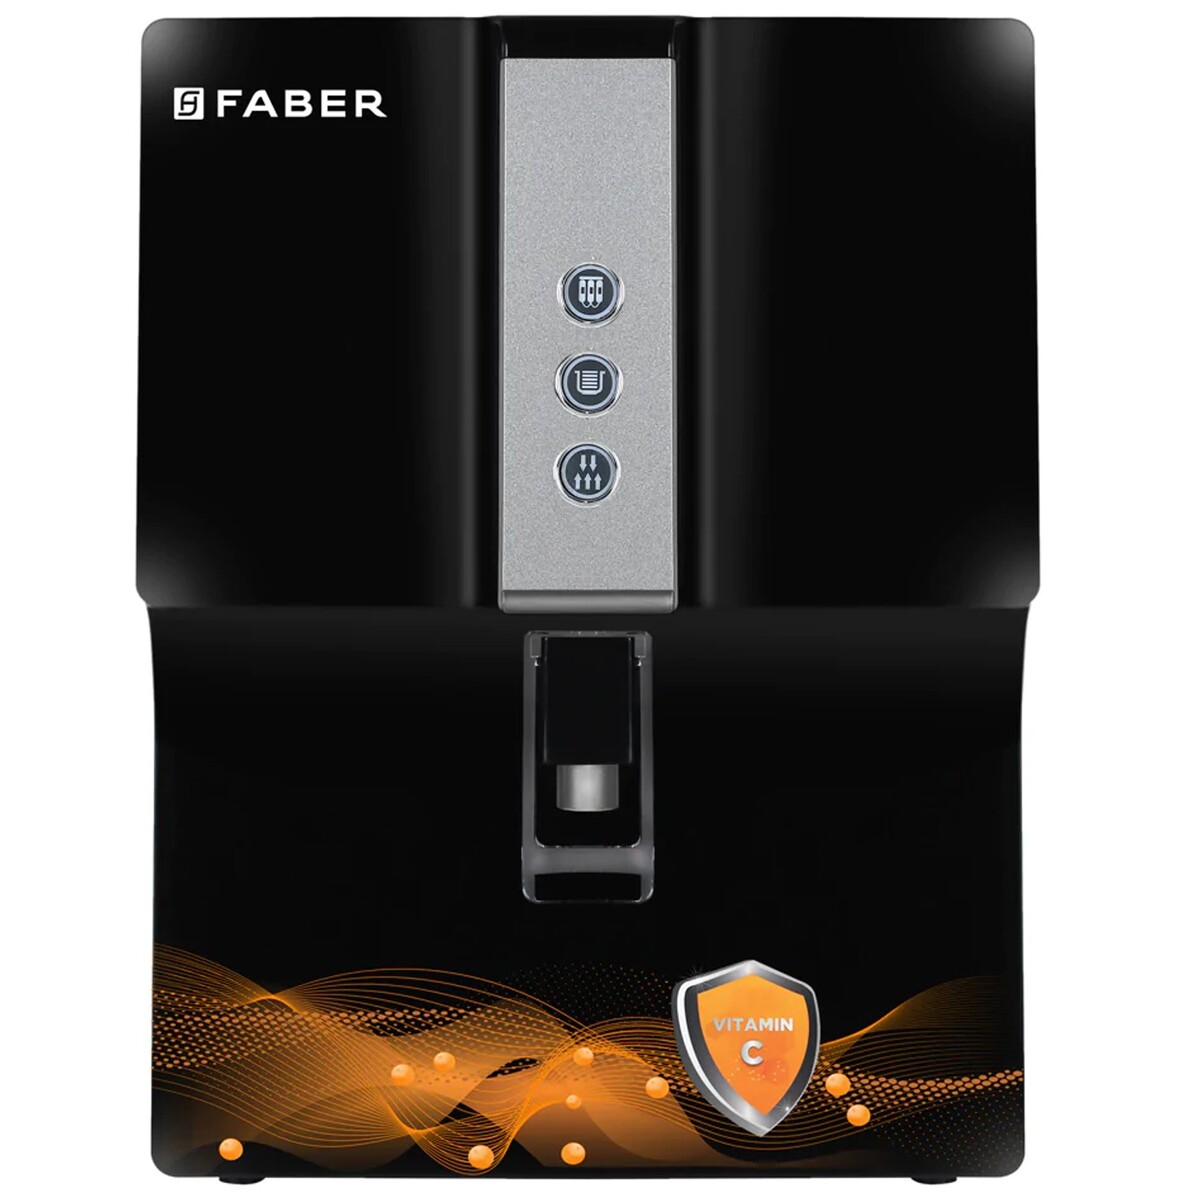 Faber C-Guard Water Purifier (RO+ MAT+ VITAMIN C)